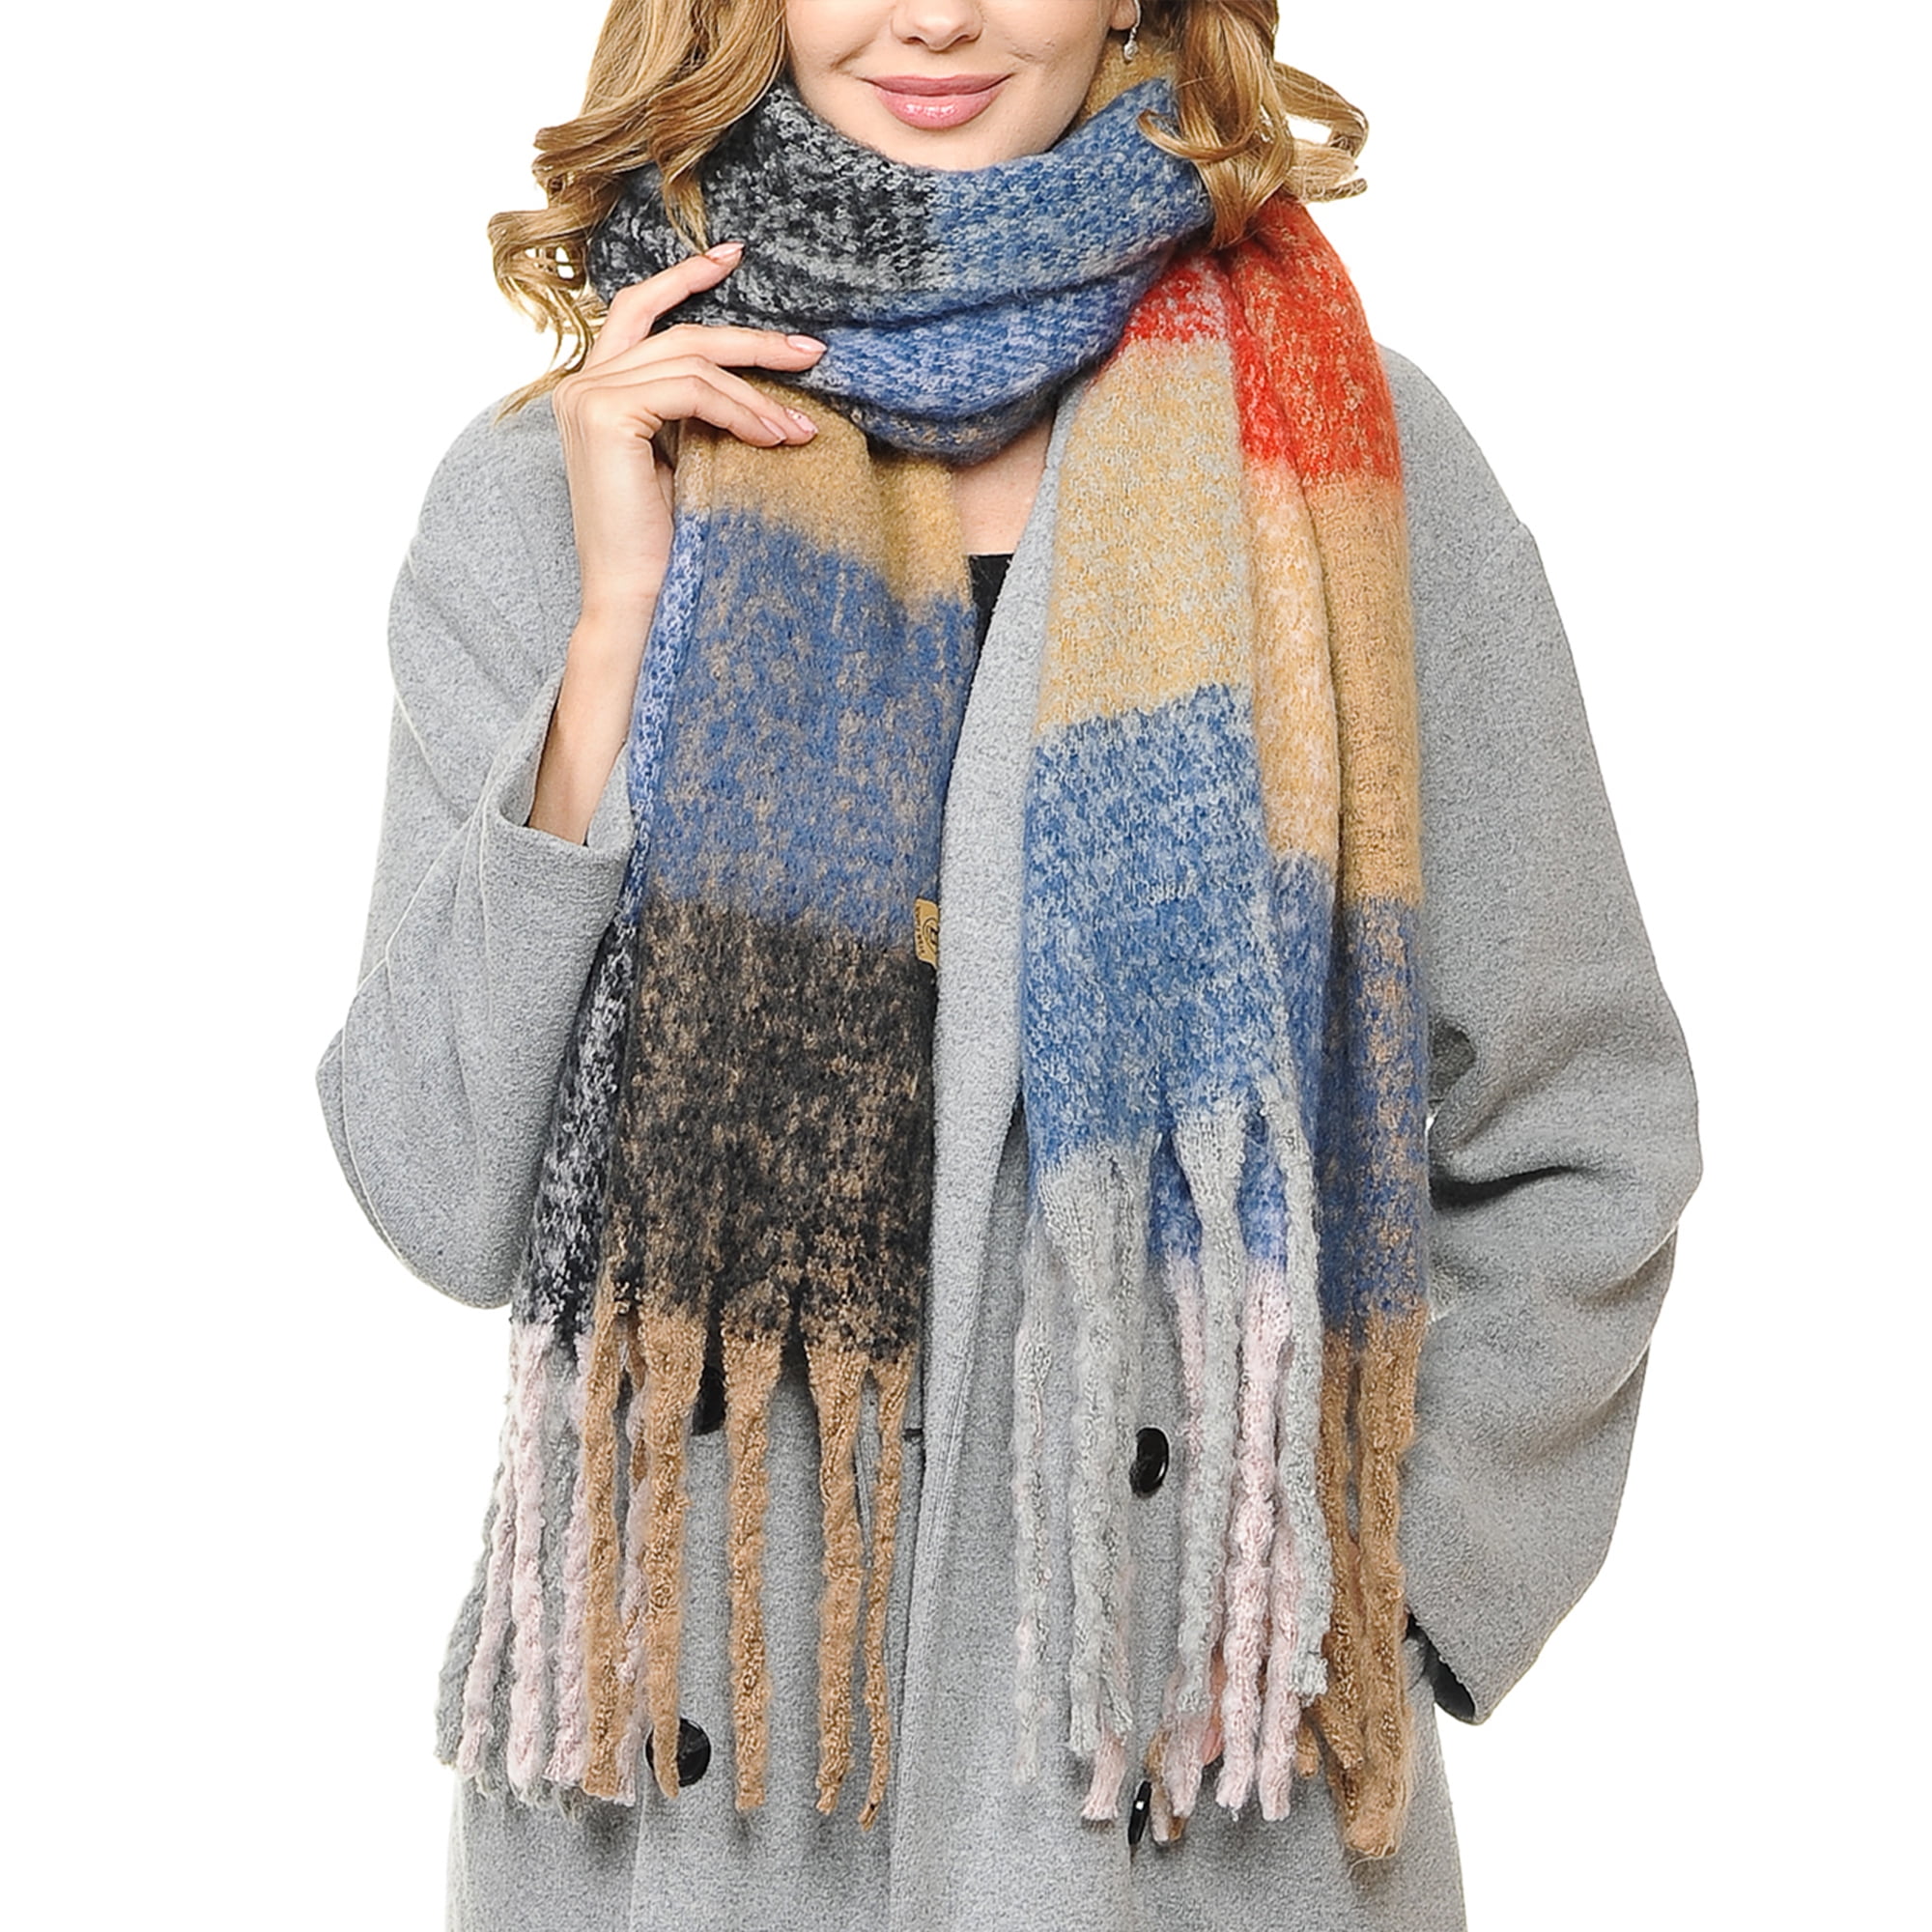 Casaba Unisex Blanket Style Warm Winter Scarves Wraps Shawls Long Great Gifts 